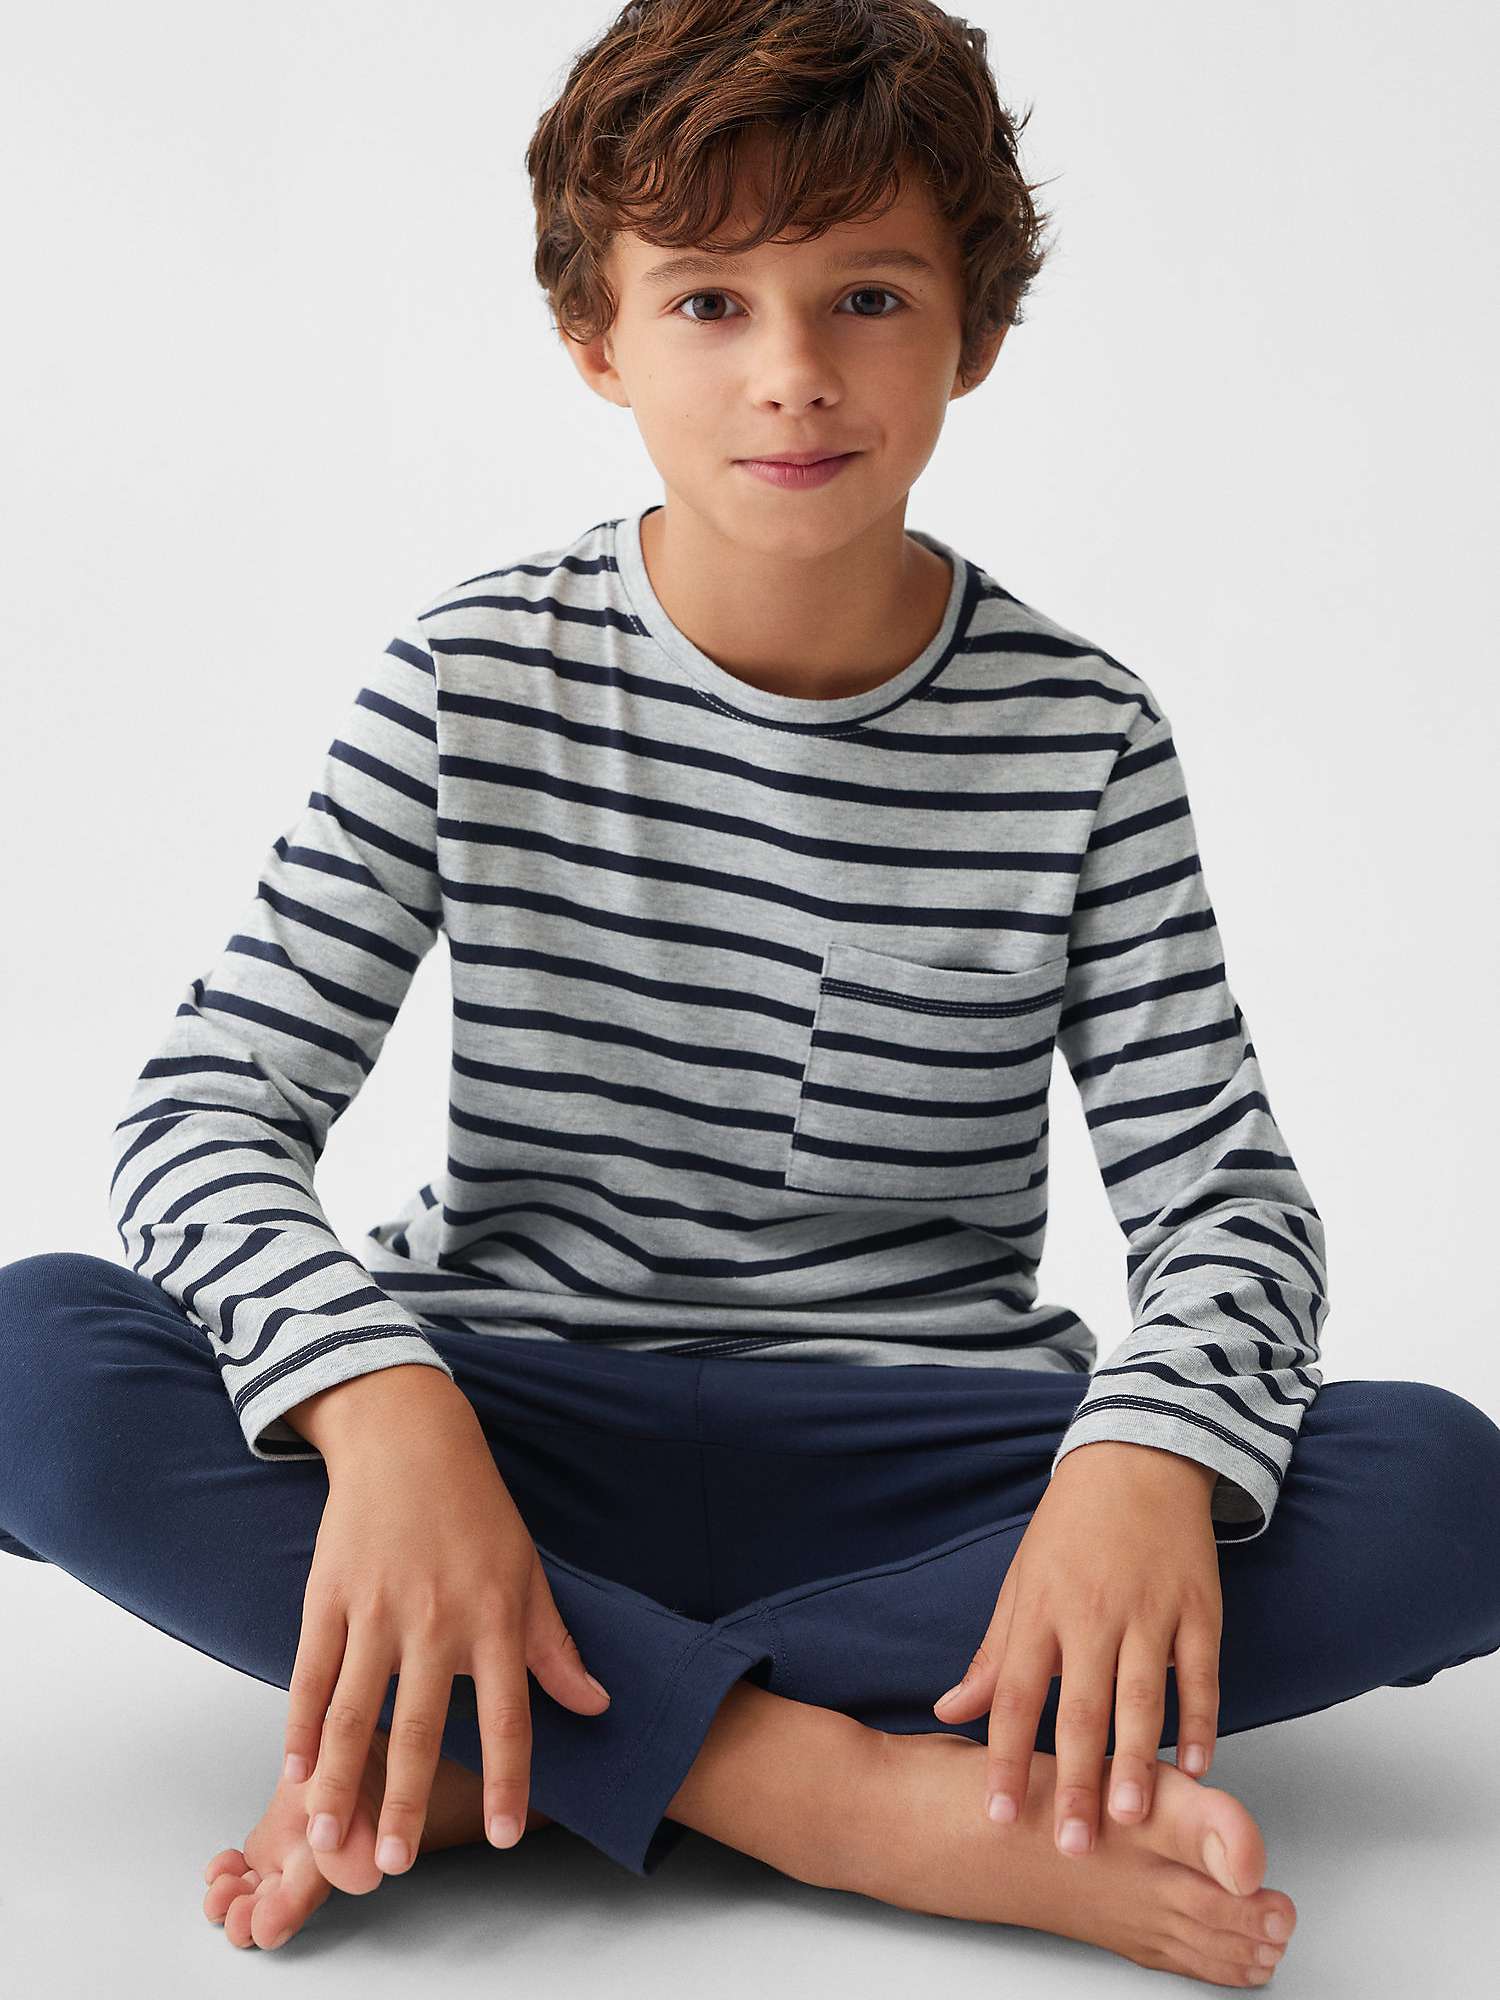 Buy Mango Kids' Stripe Long Sleeve Pyjamas, Navy Online at johnlewis.com